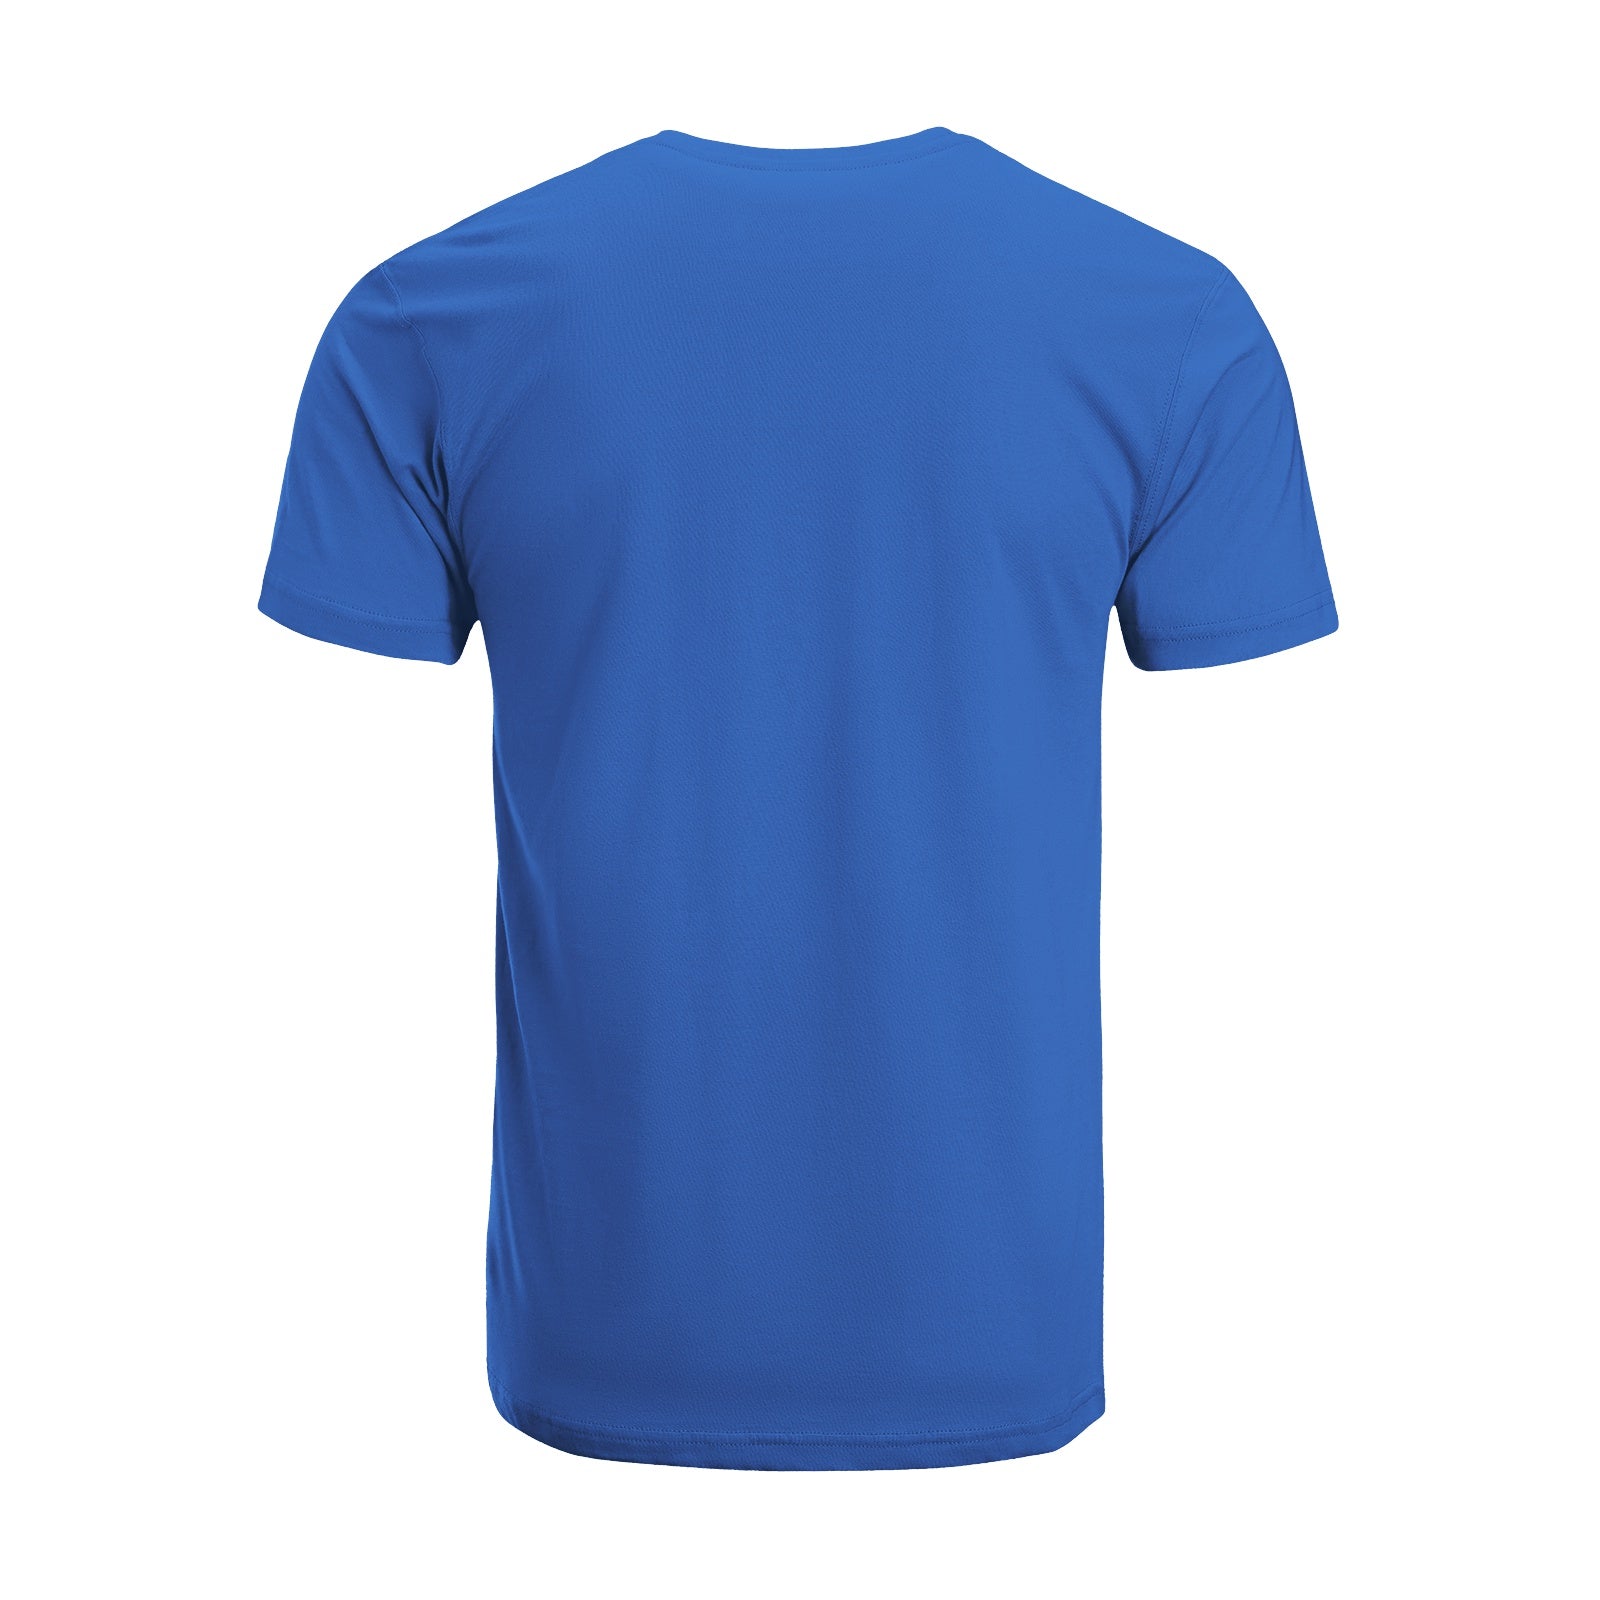 Unisex Short Sleeve Crew Neck Cotton Jersey T-Shirt Gym No. 25 - Tara-Outfits.com